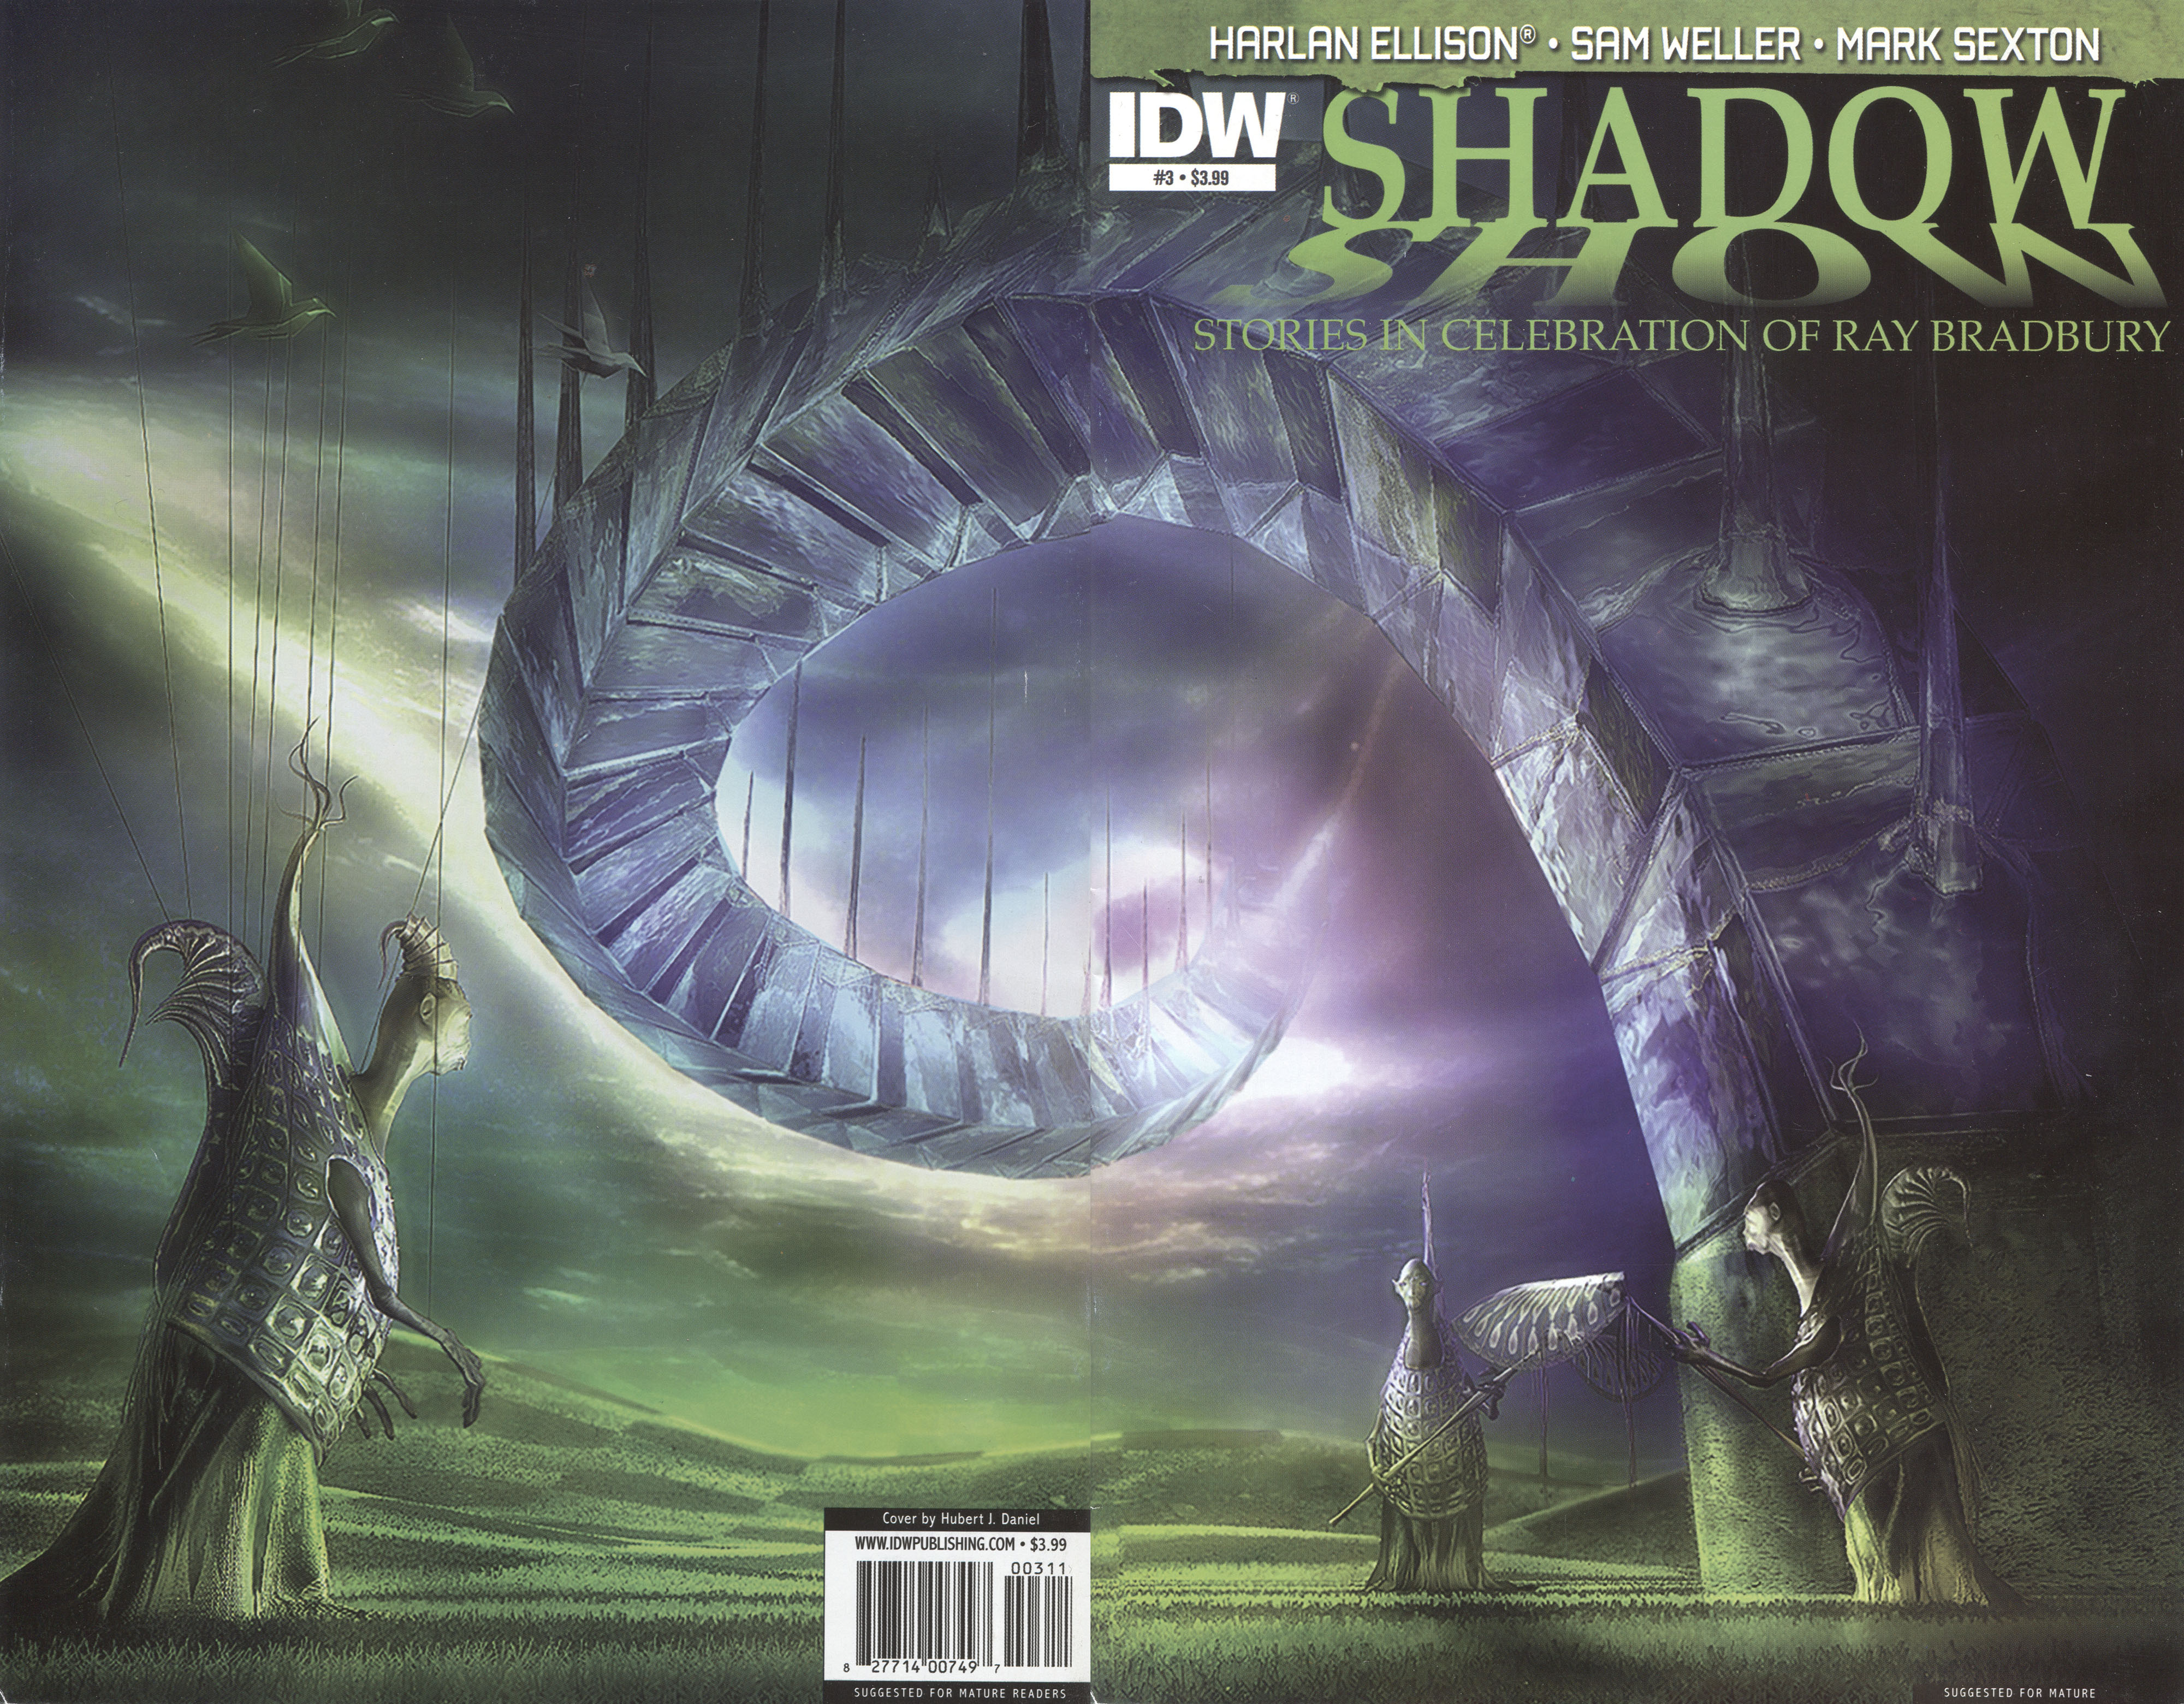 Shadow Show #3 (IDW, 2015), art by Hubert J. Daniel